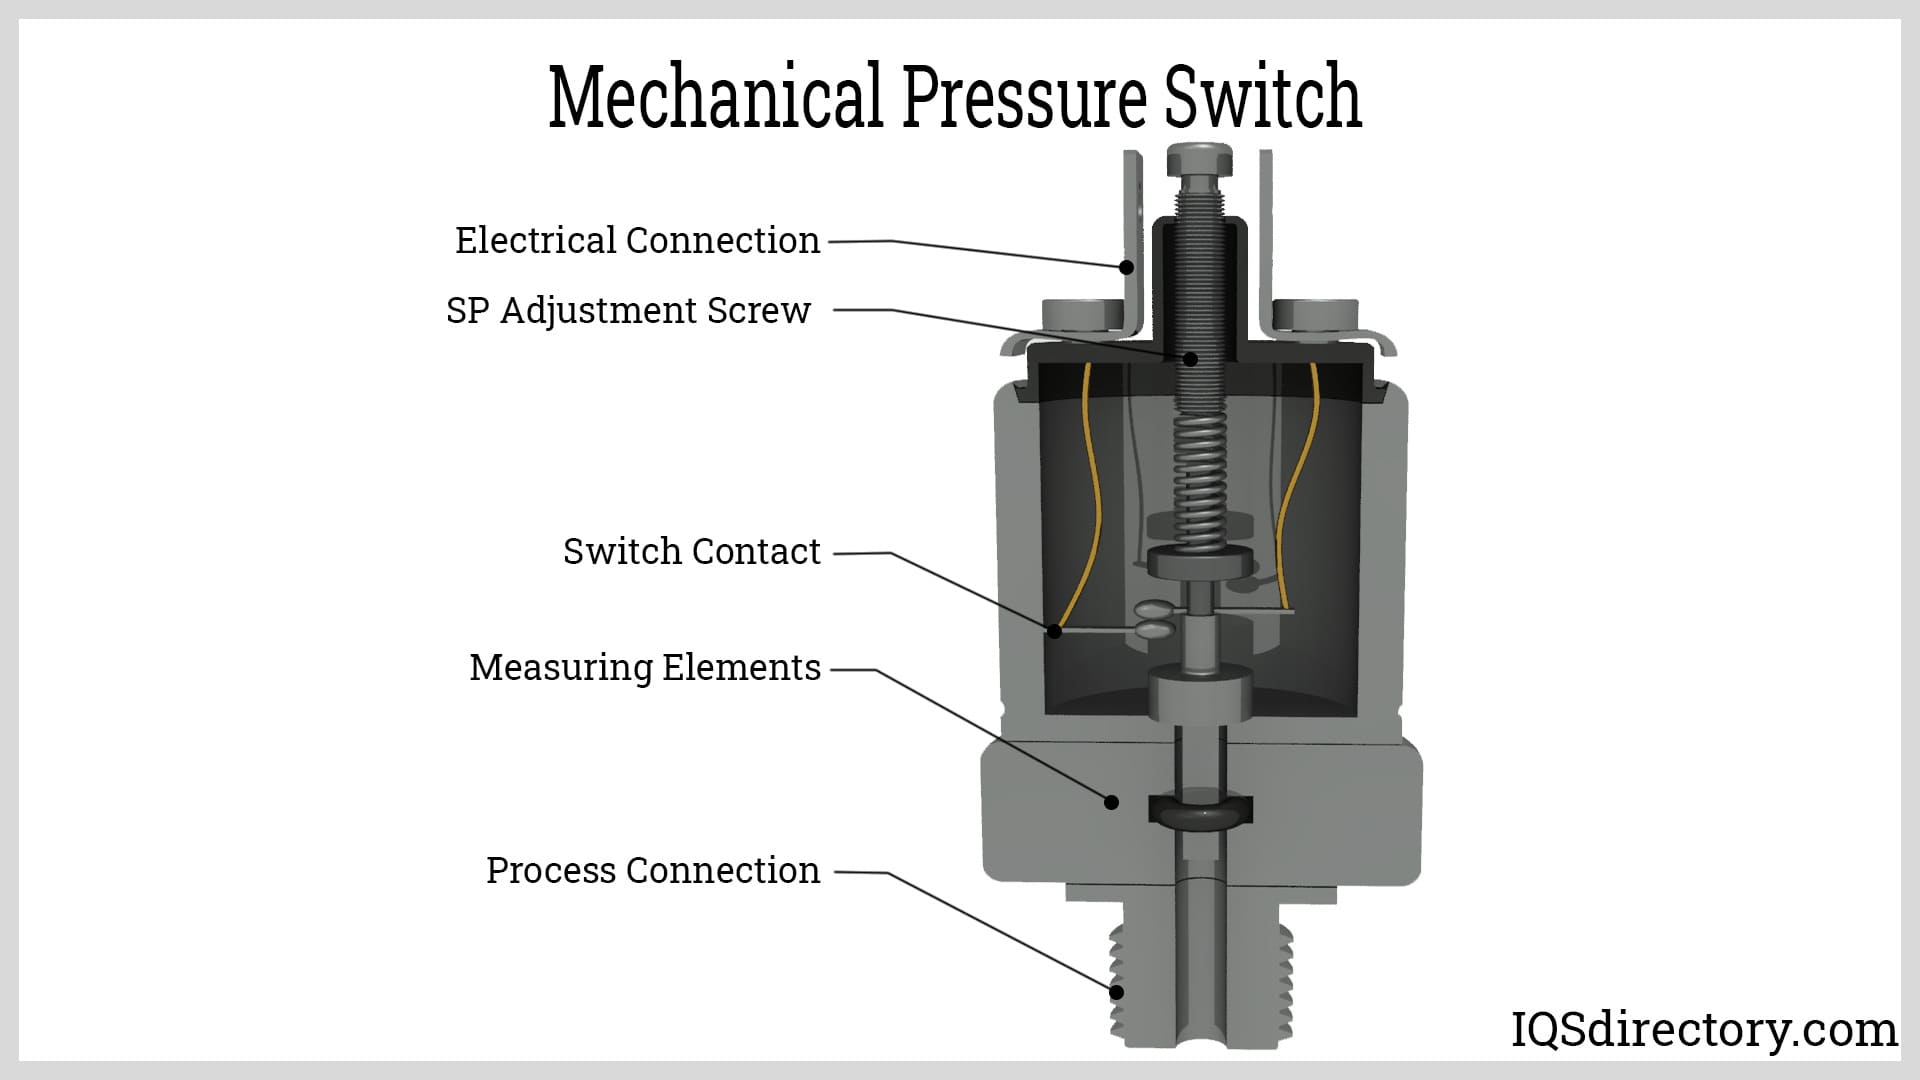 Mechanical Pressure Switch